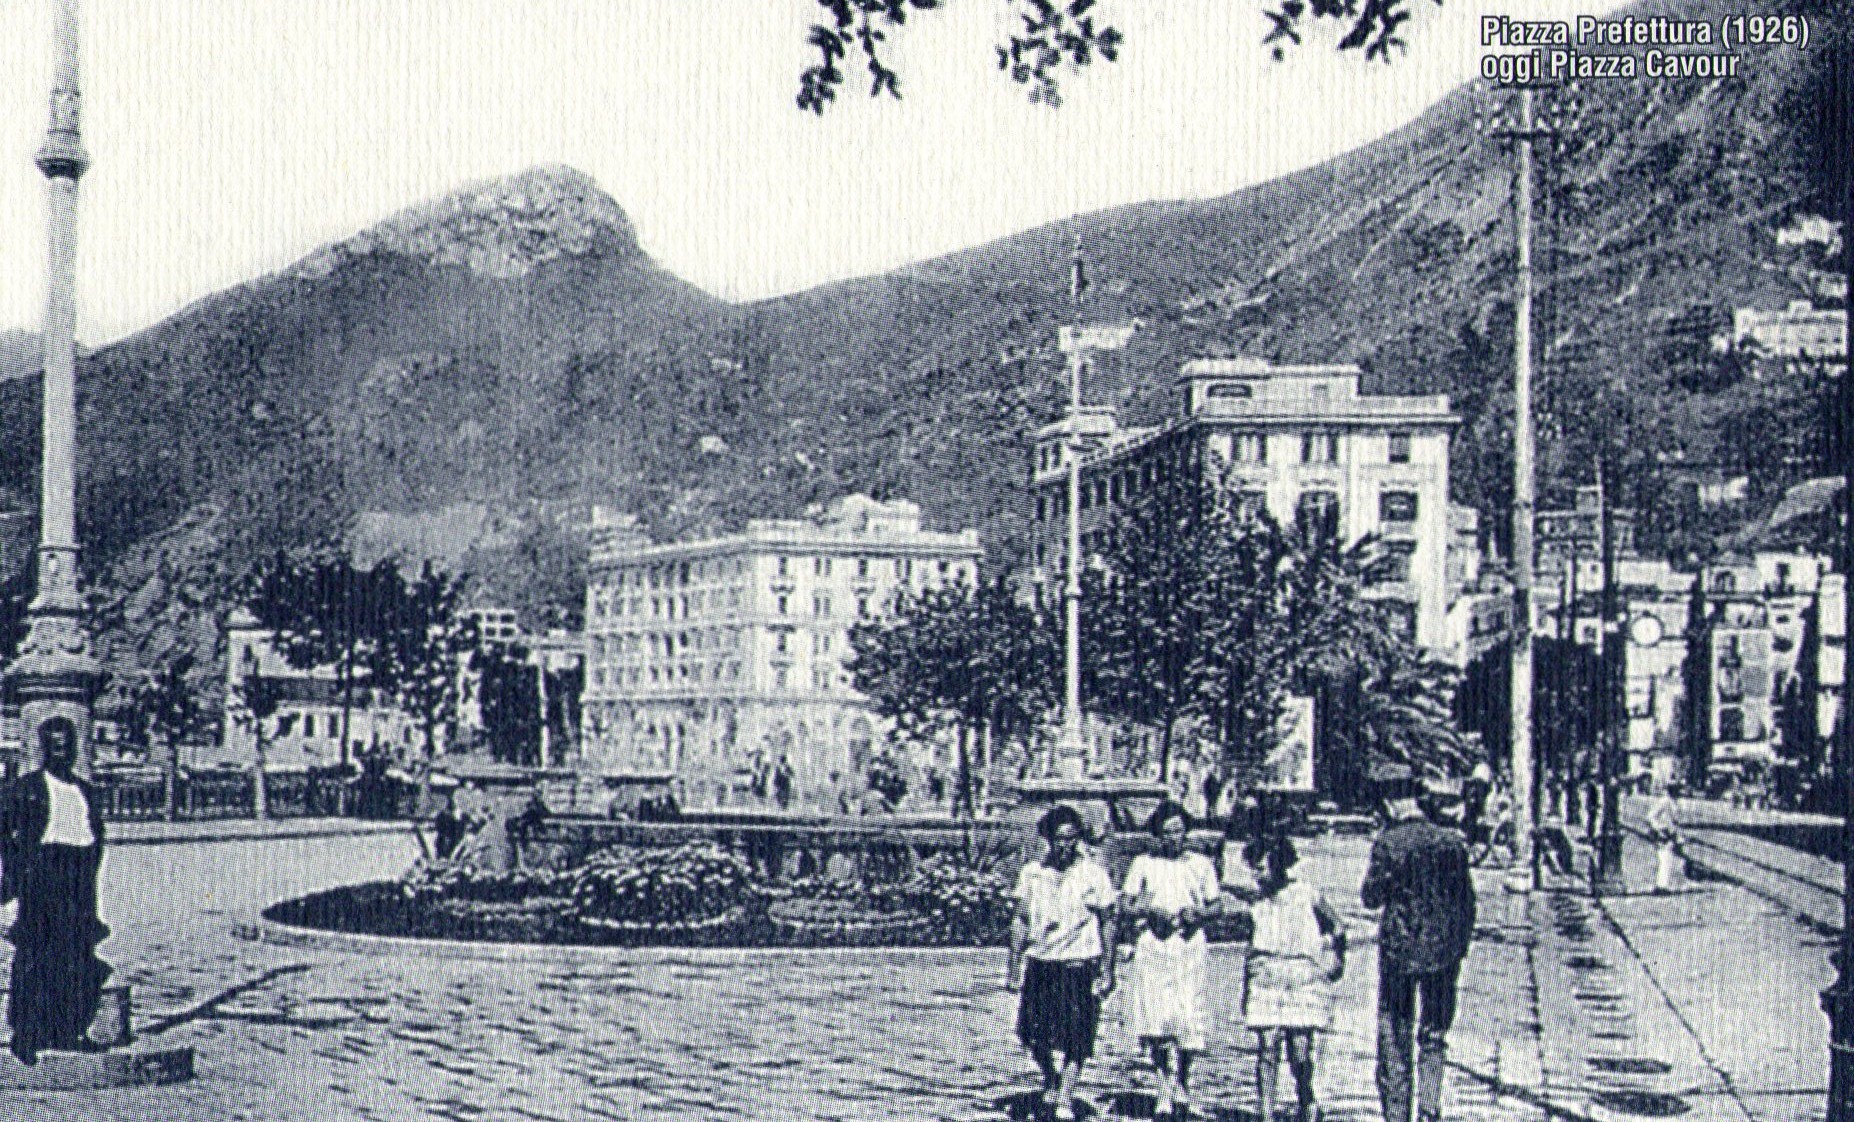 
		Piazza Prefettura (1926)        